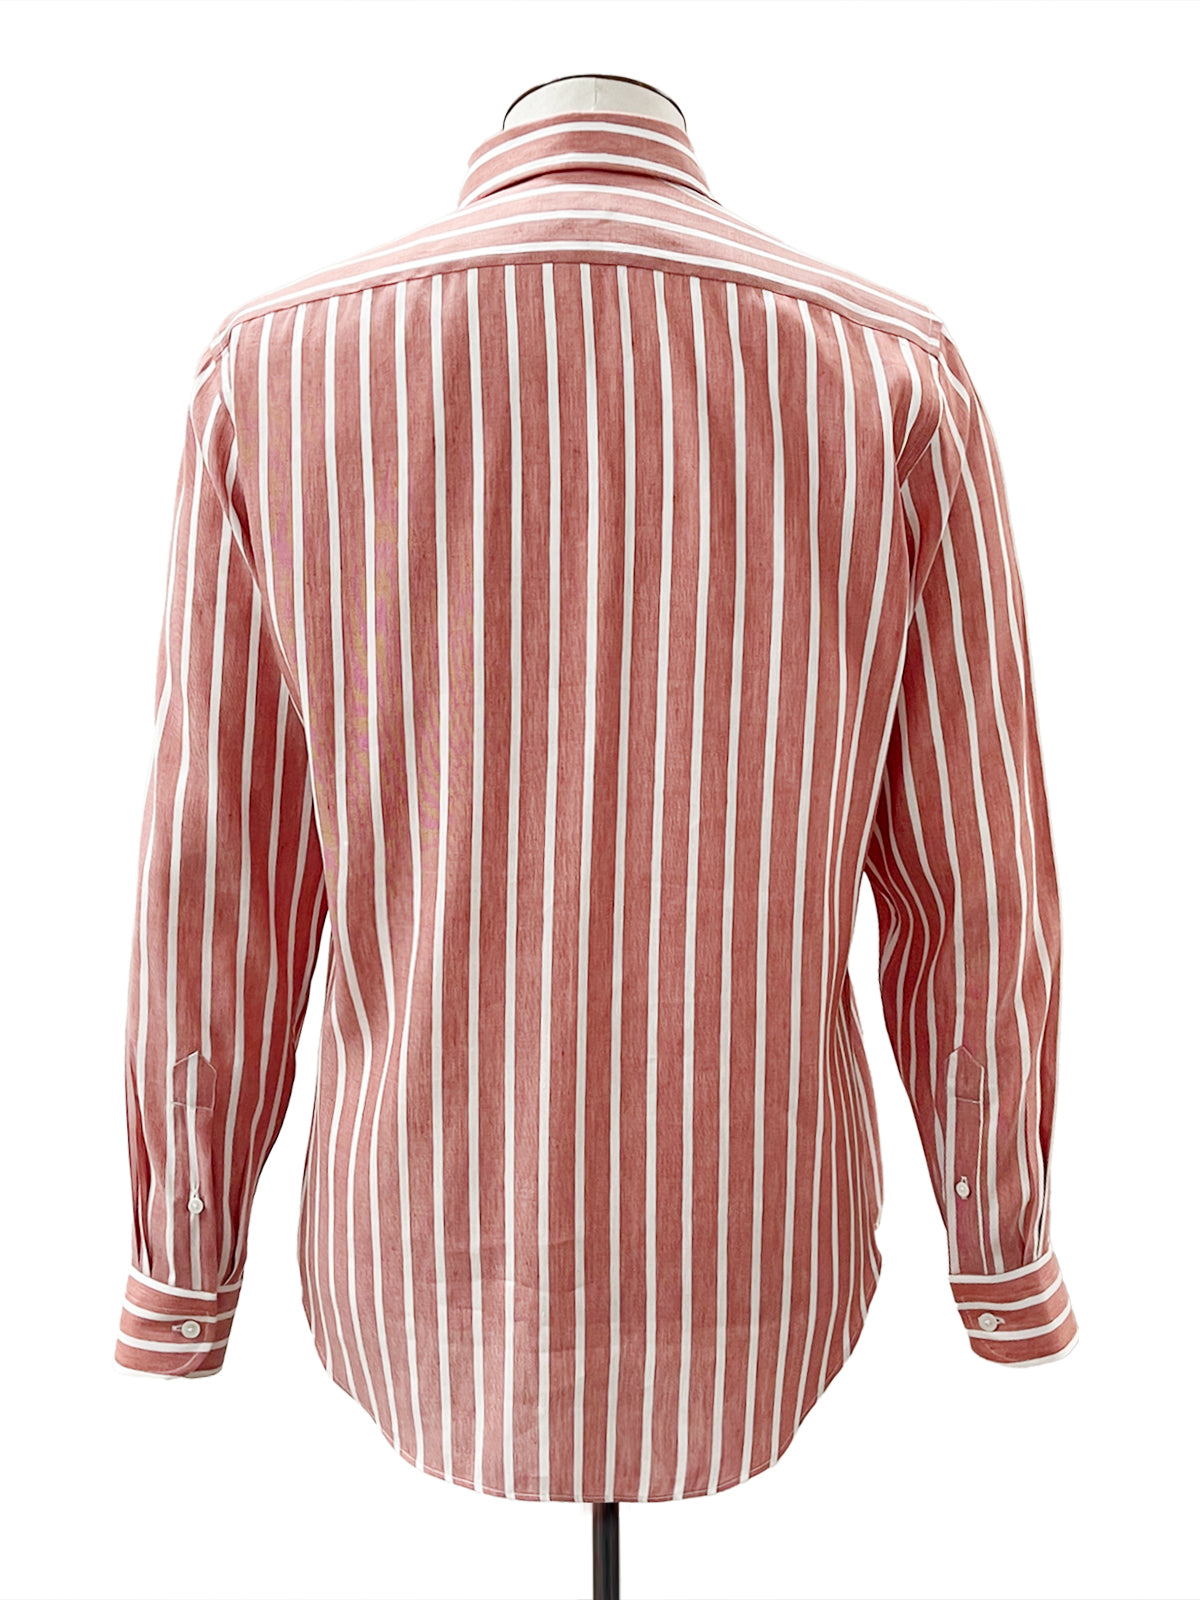 Clay & White Bengal Stripe Linen Shirt